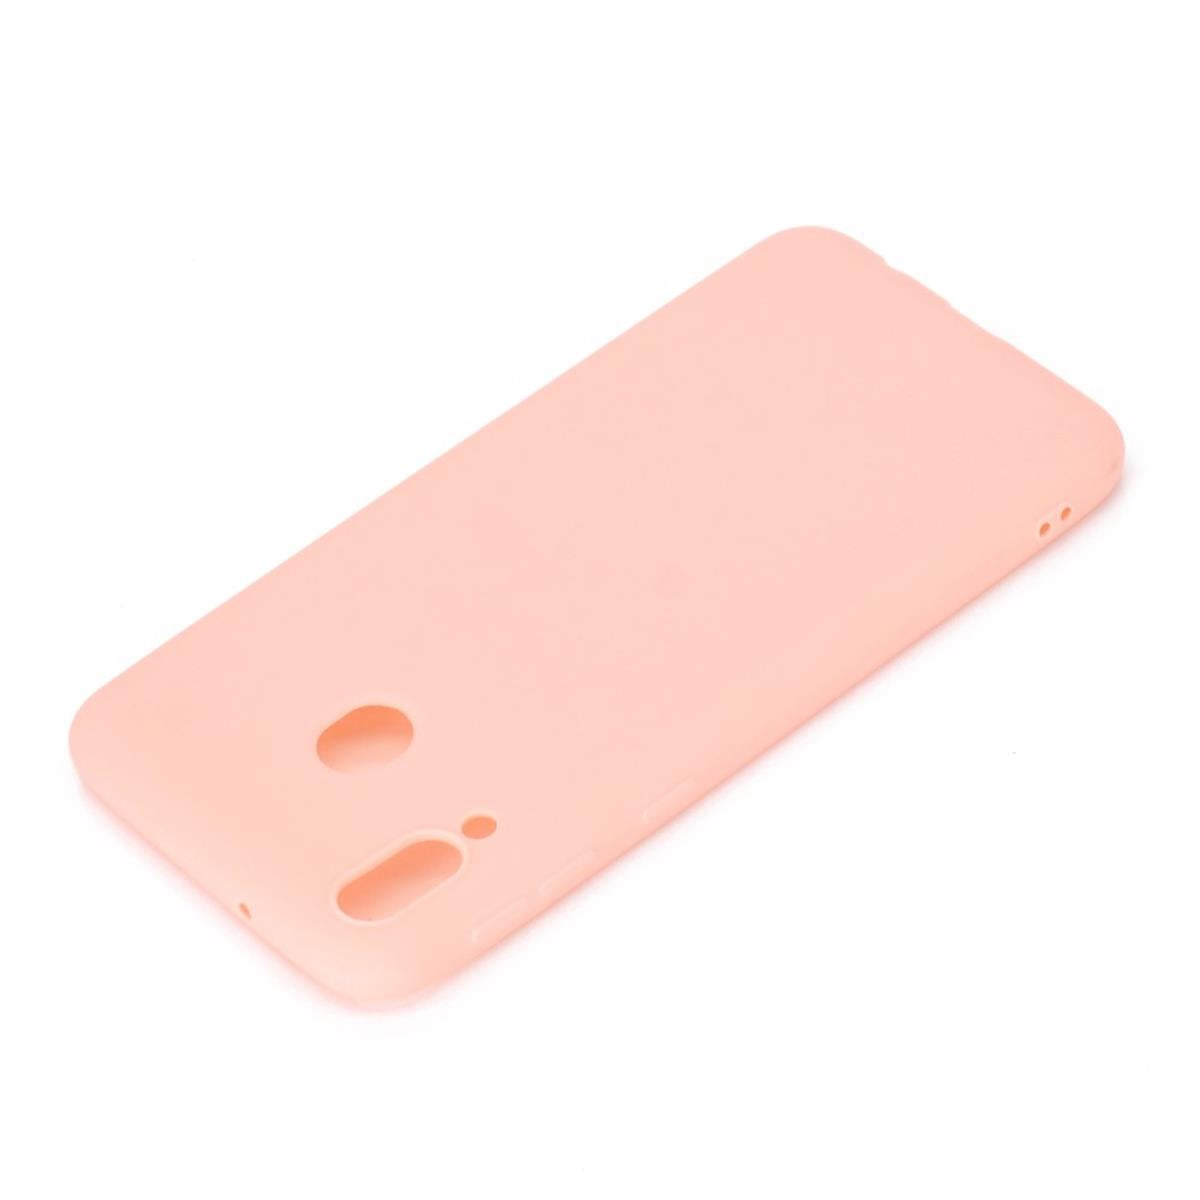 Hülle für Samsung Galaxy M20 Handyhülle Silikon Case Schutzhülle Etui matt Rosa